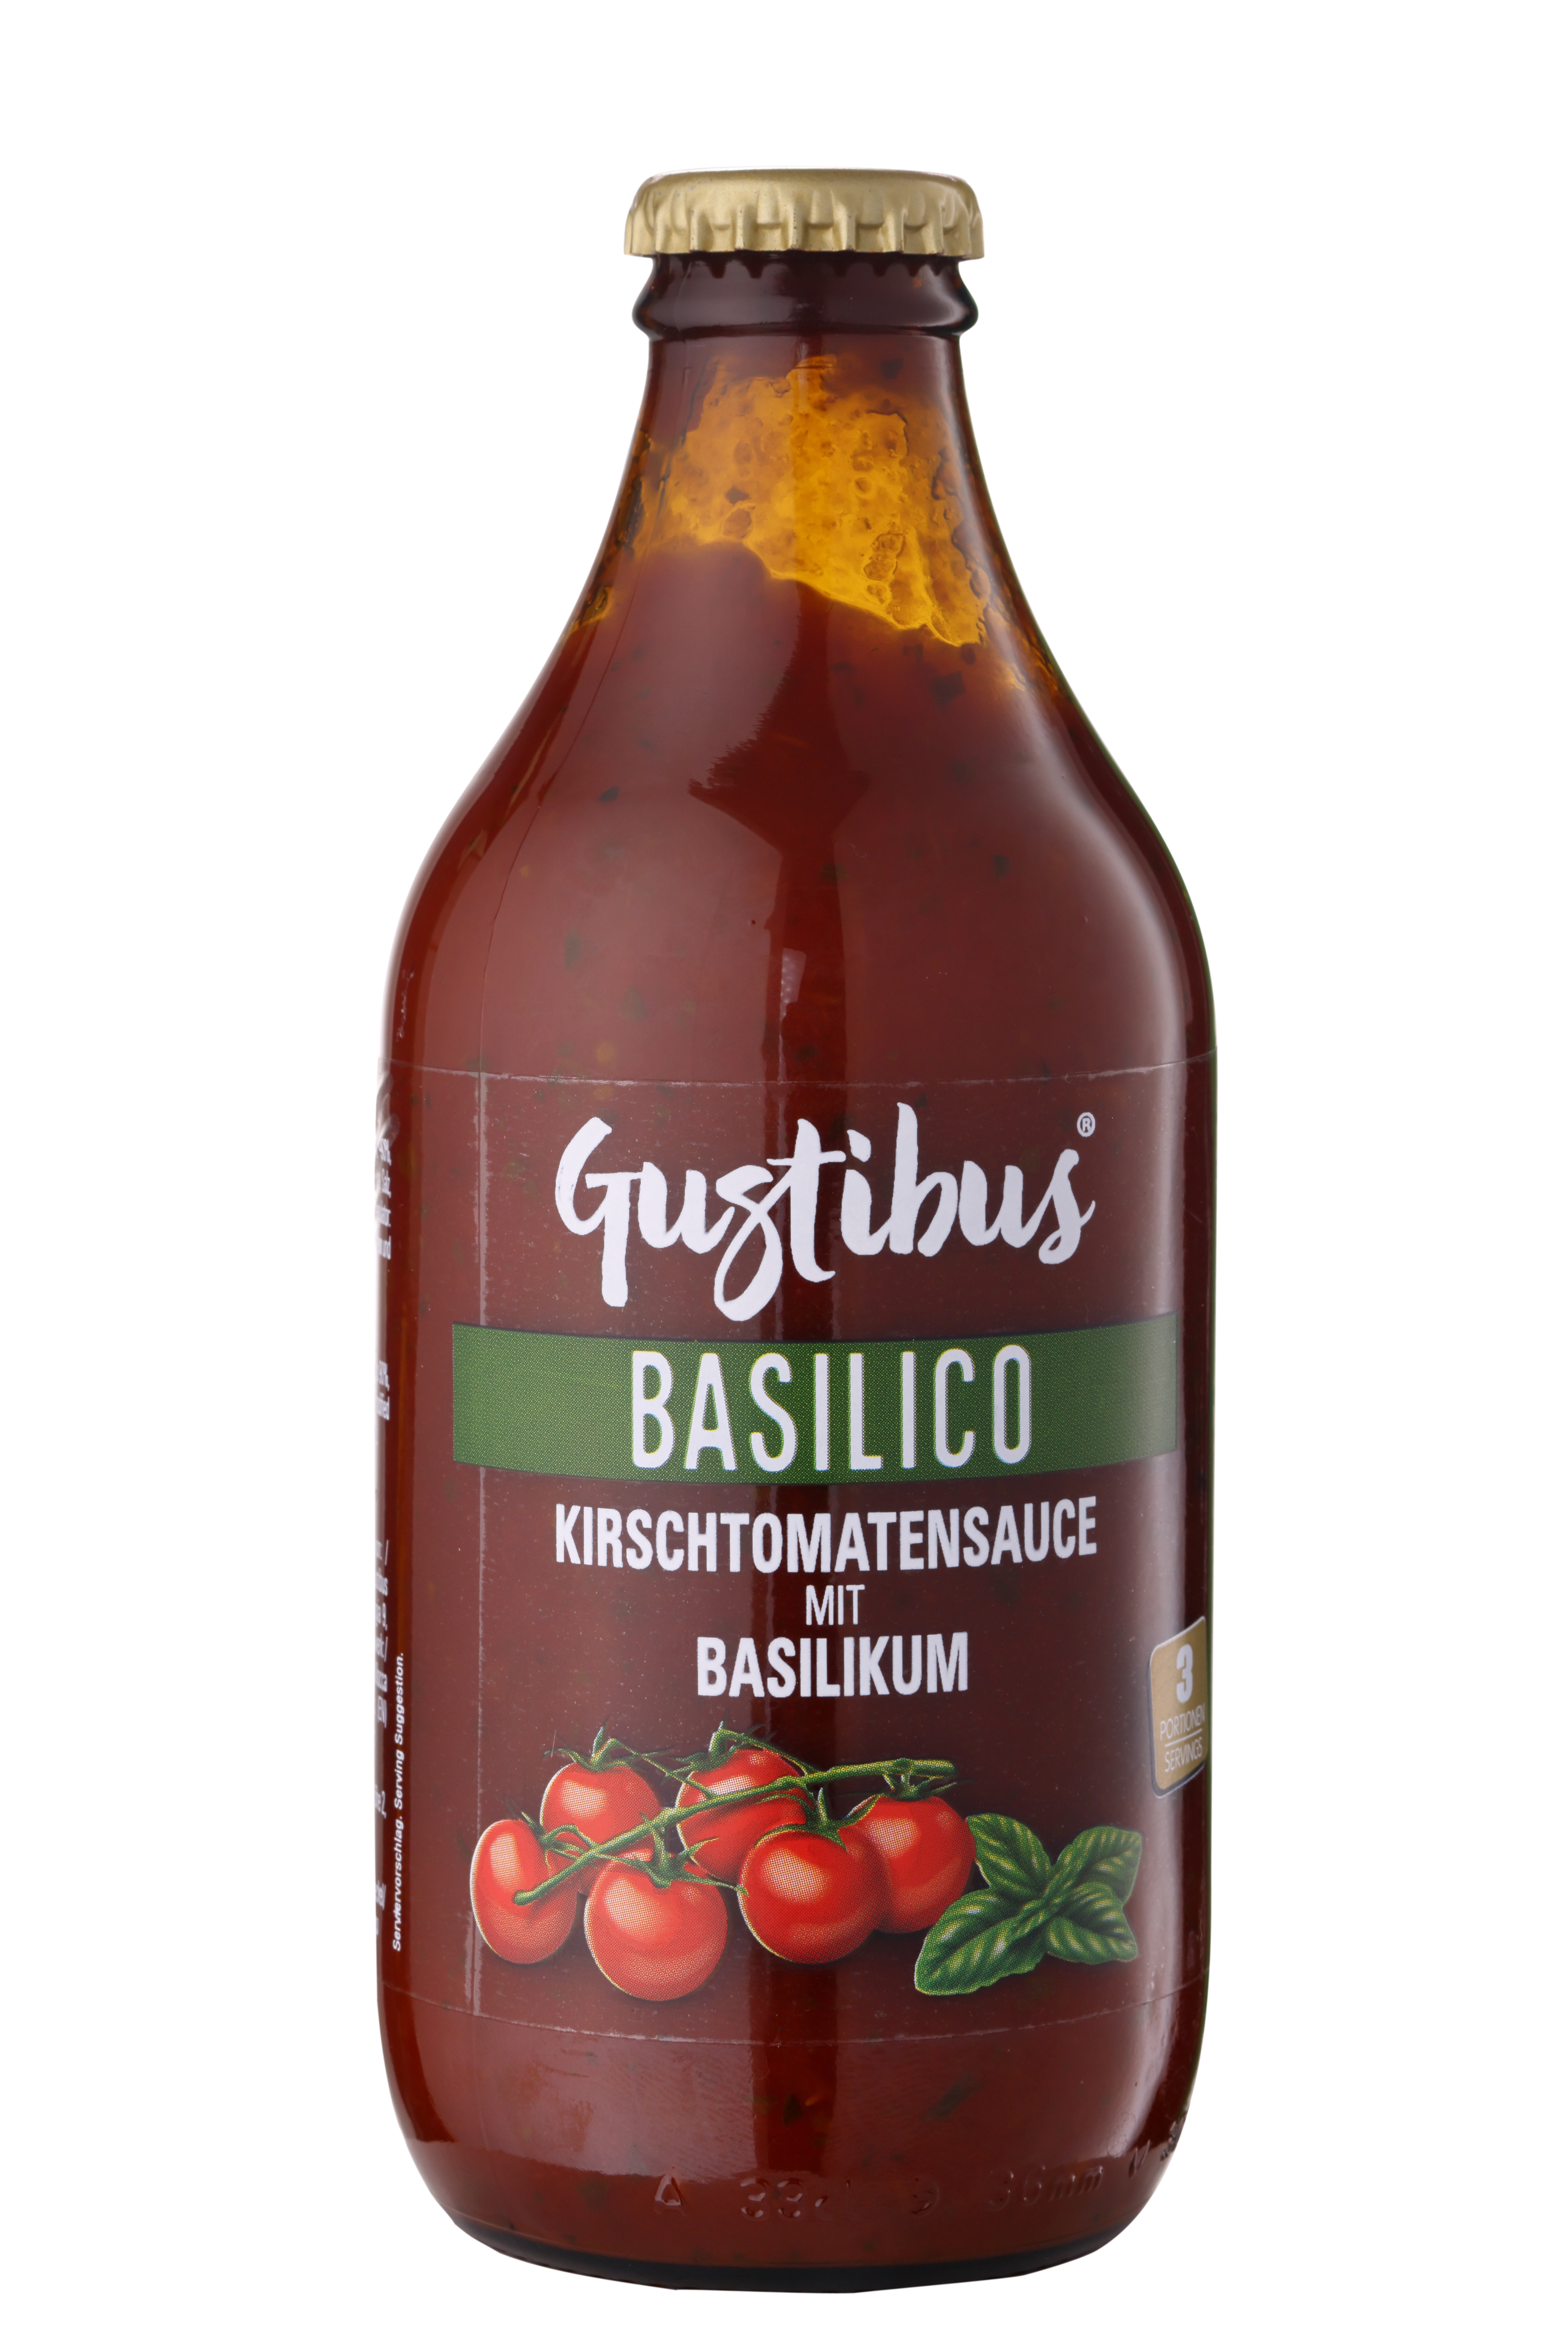 Gustibus, Tomatensauce aus Kirschtomaten mit Basilikum, 330g